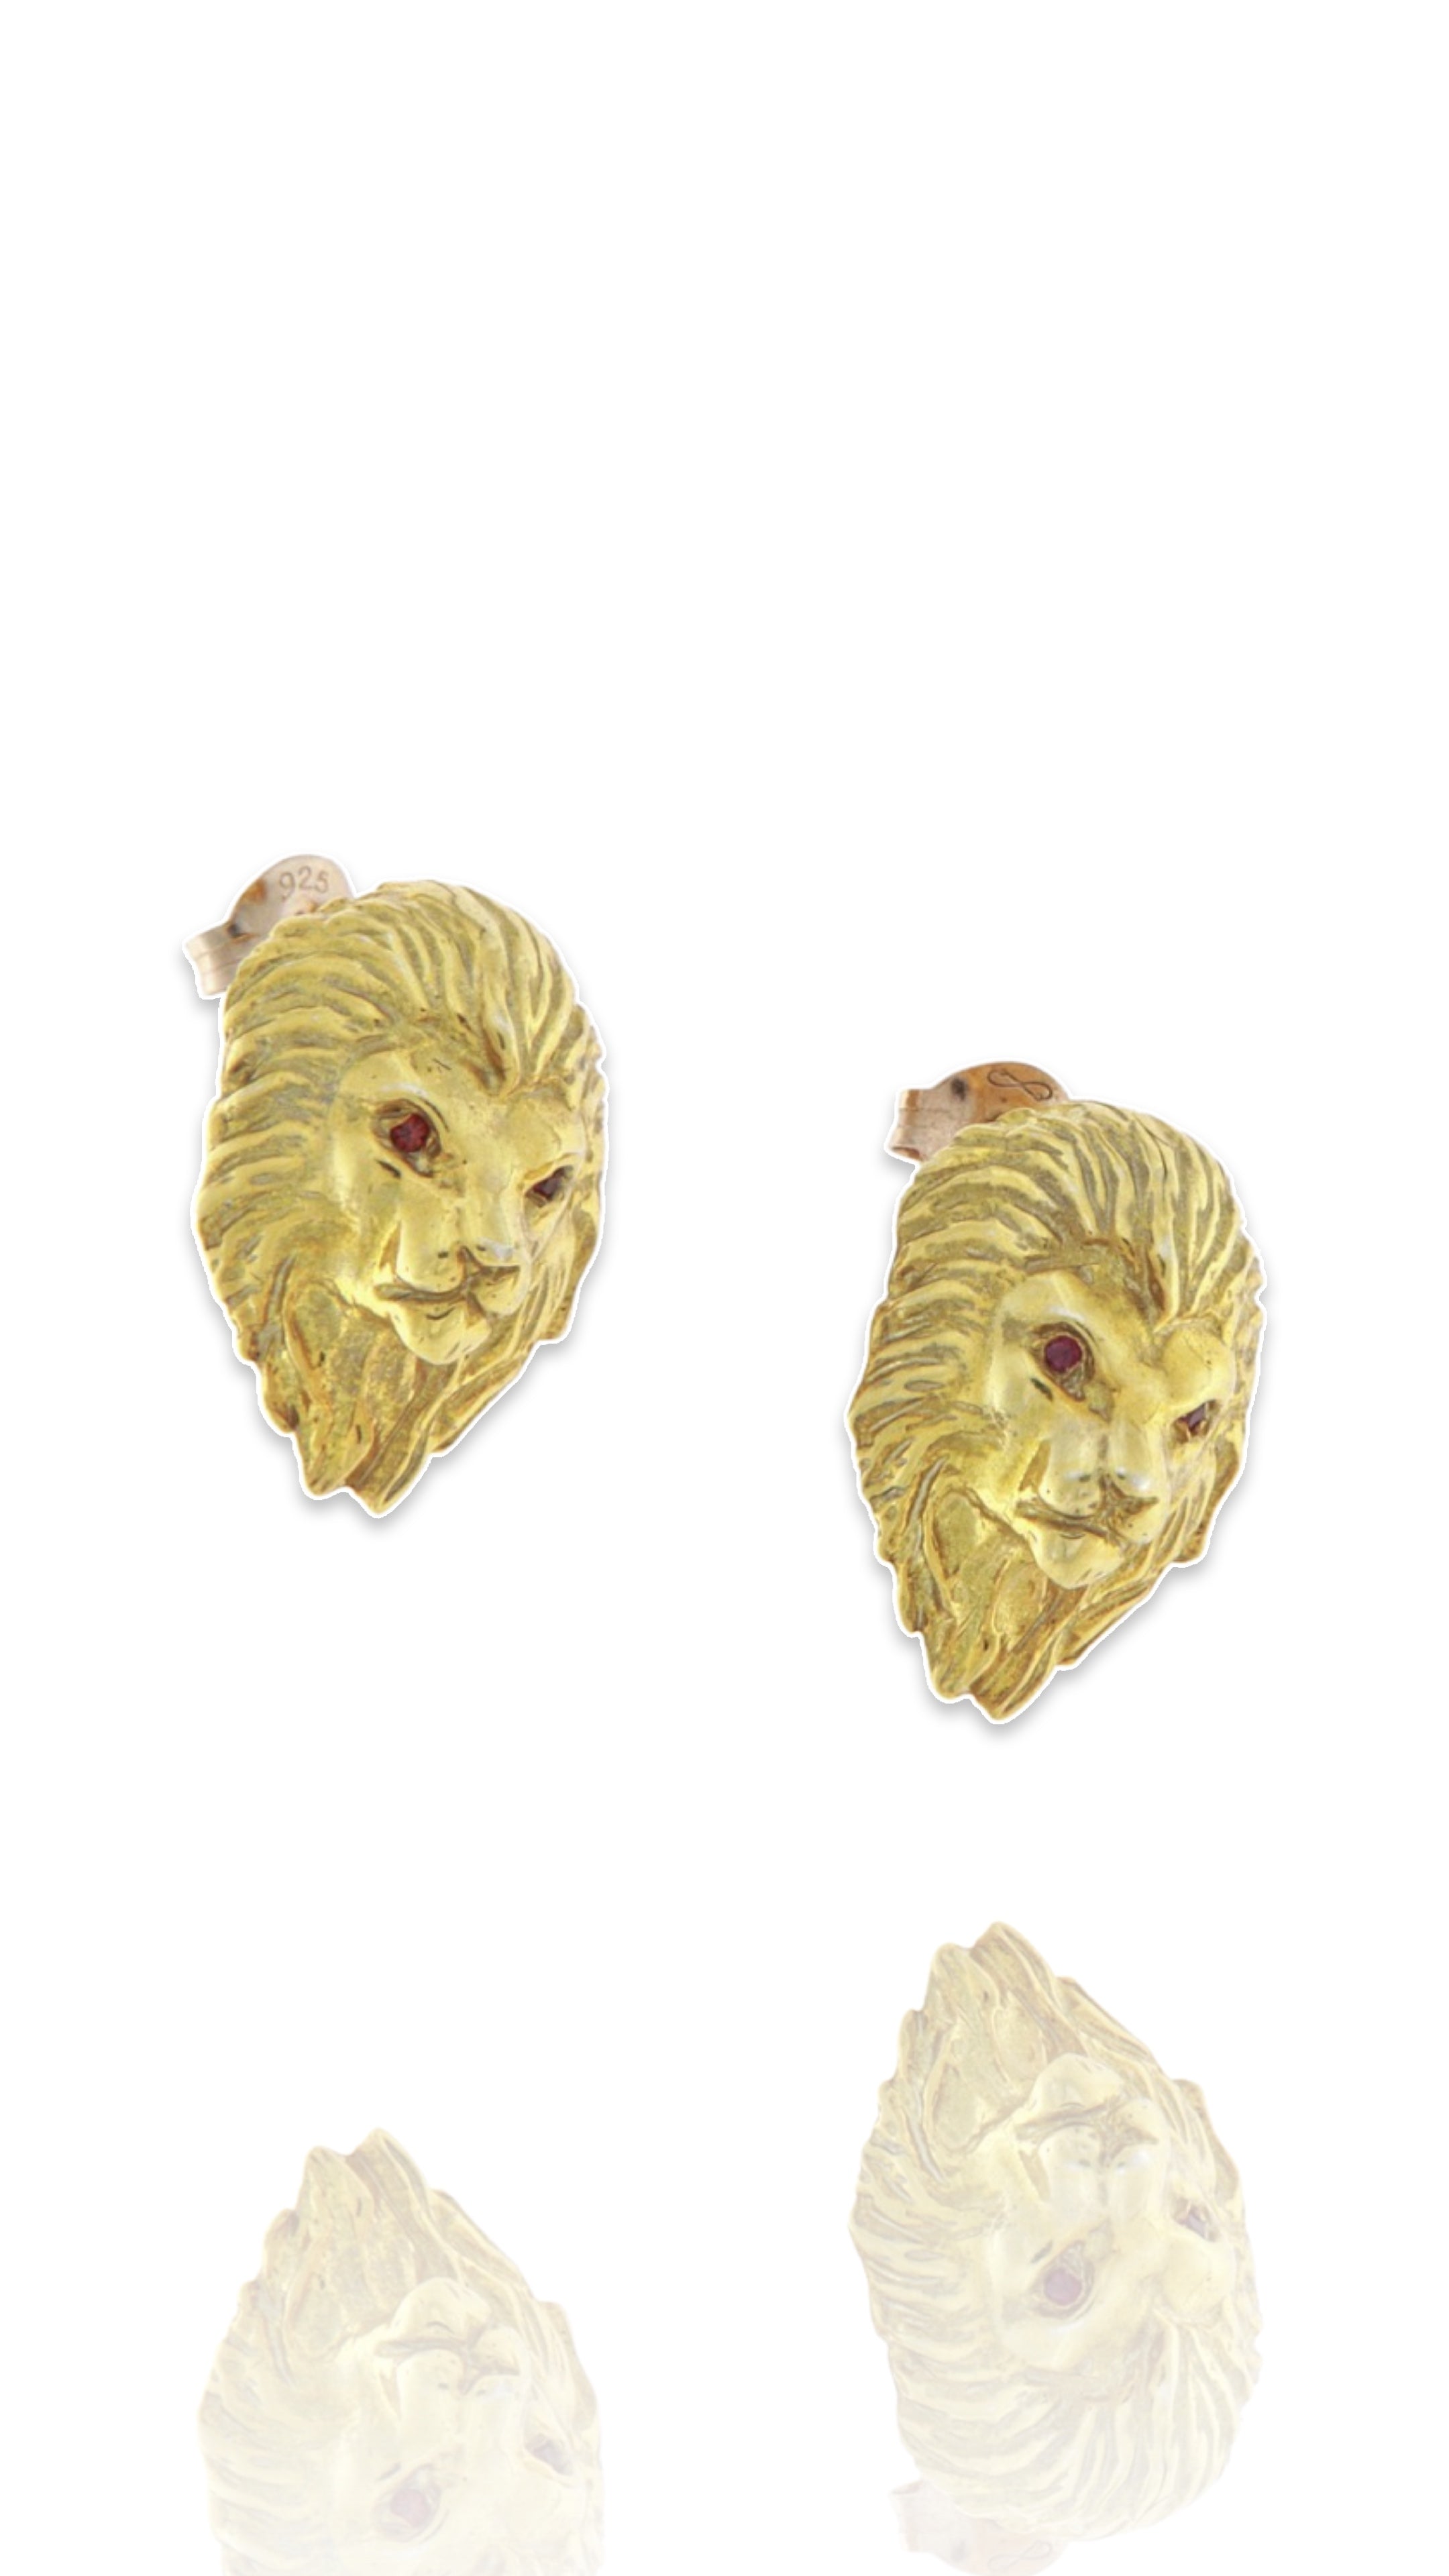 18ct gold lion earrings